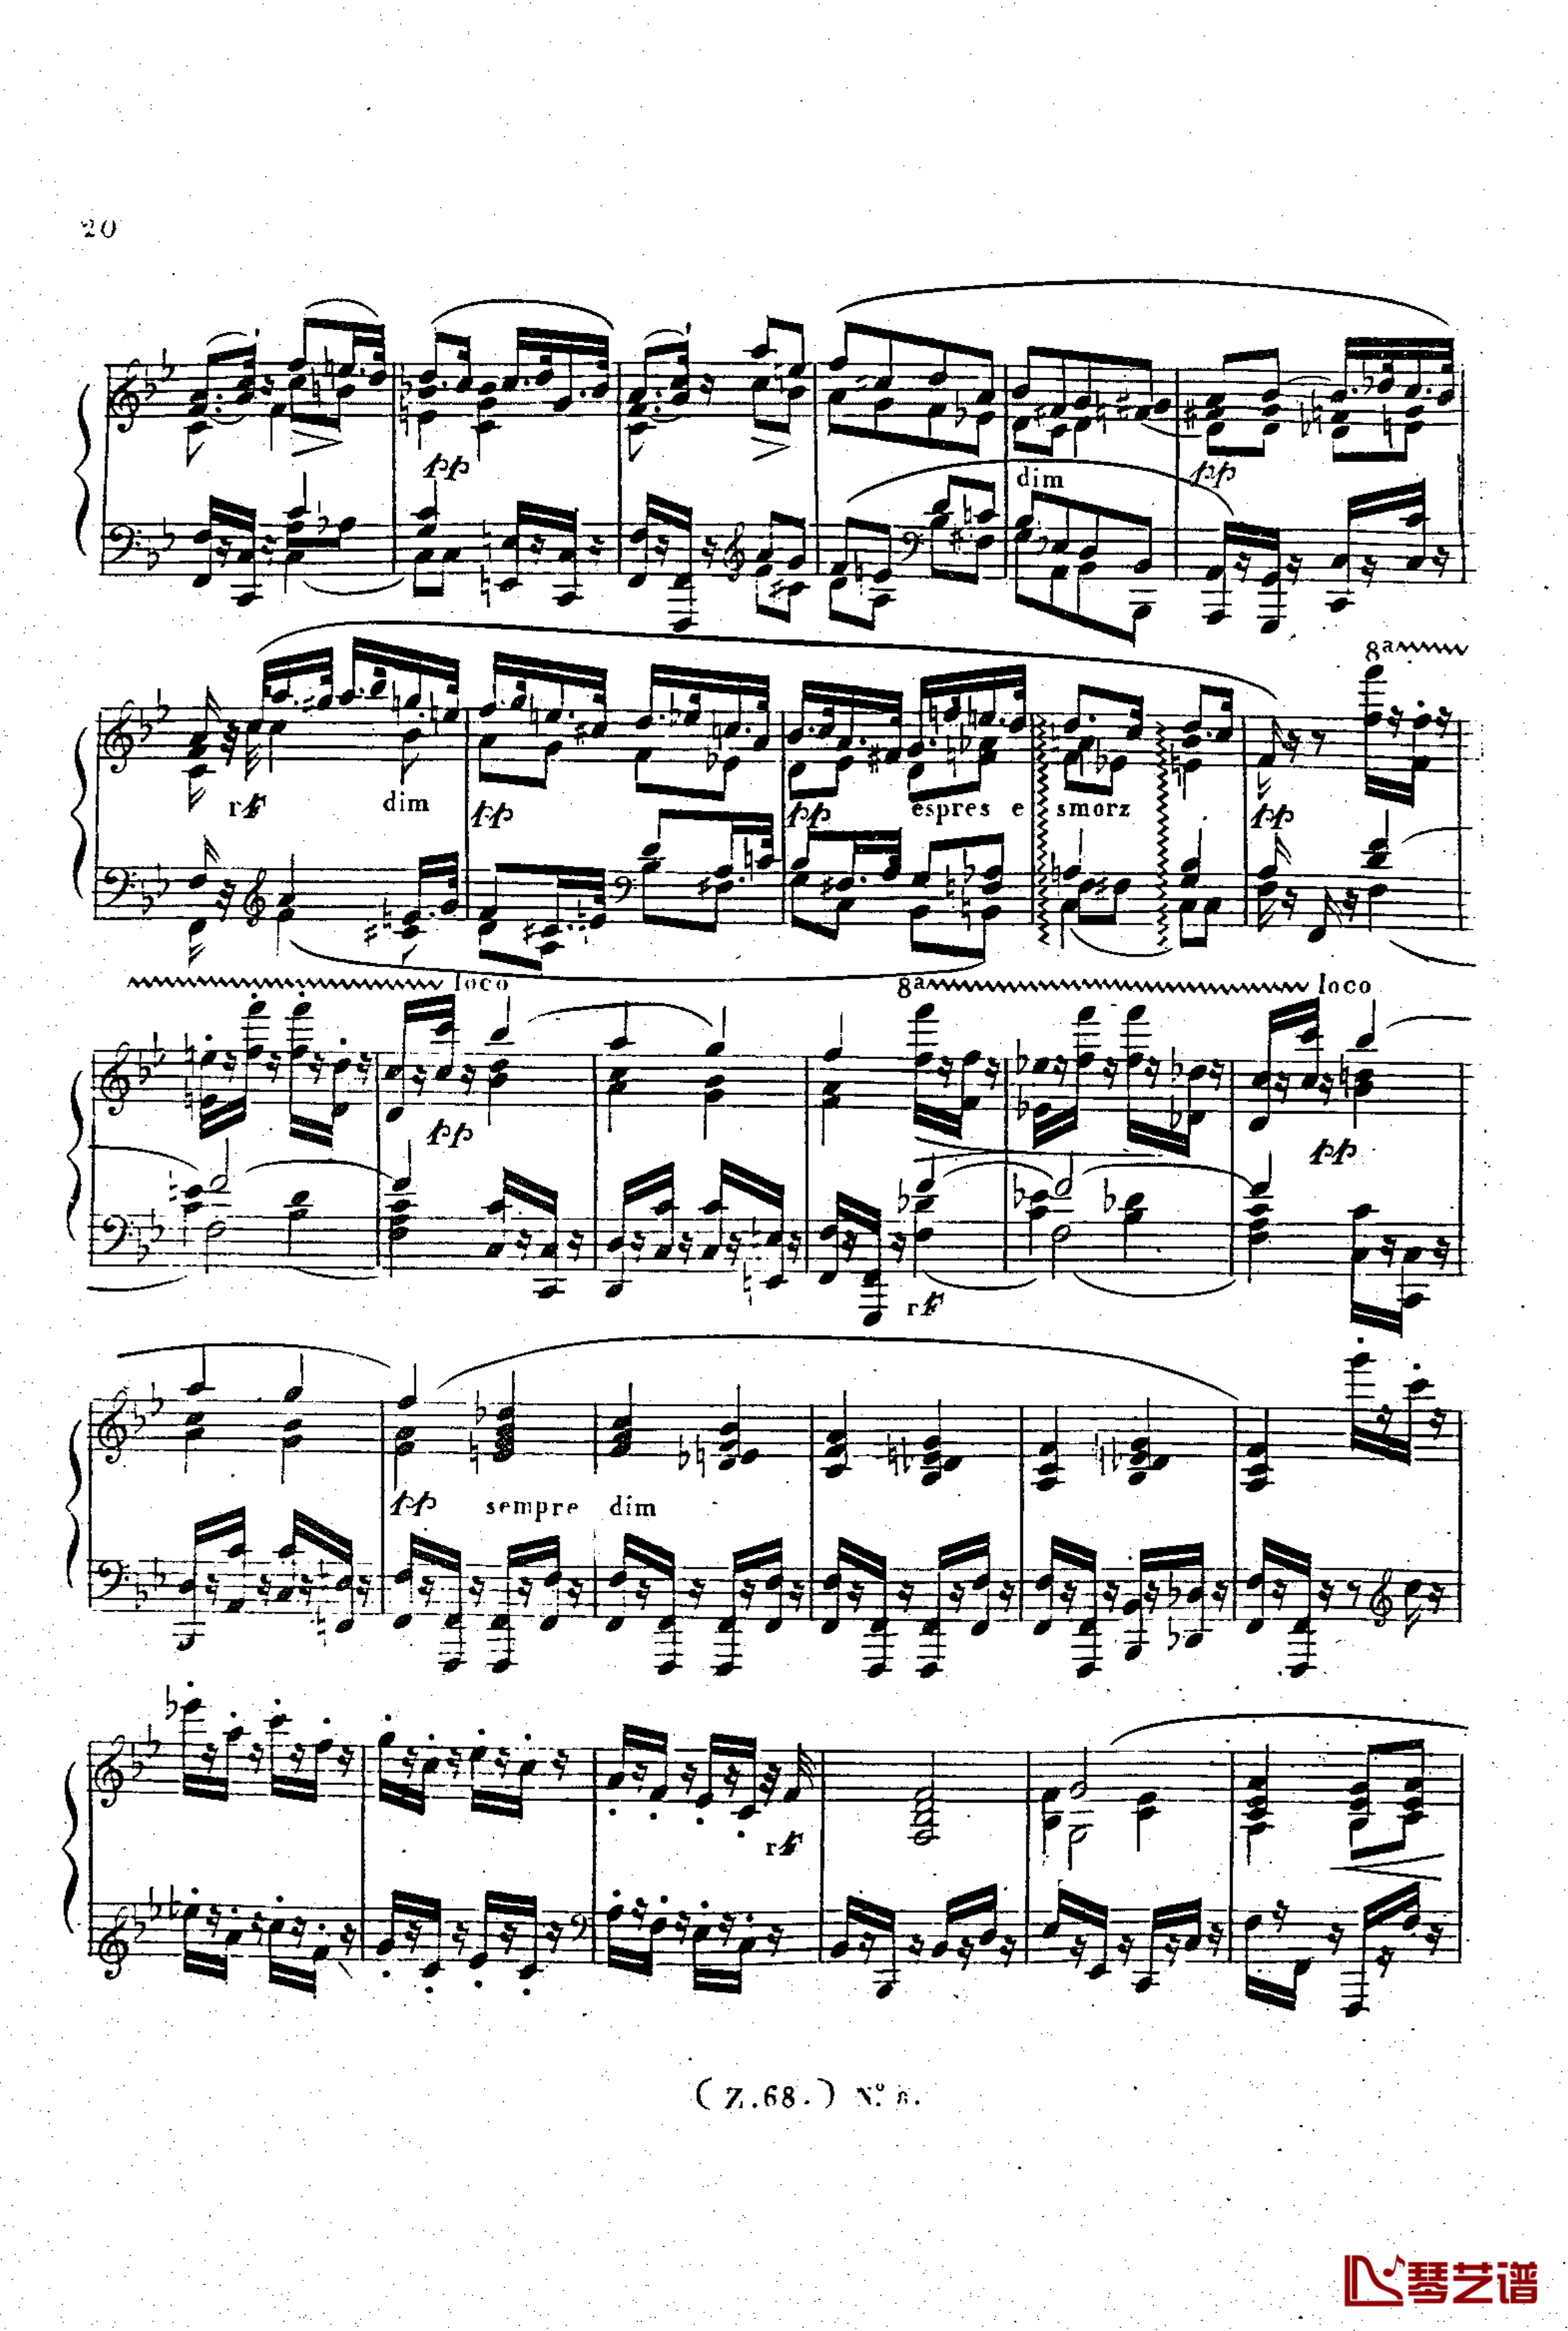  d小调第六钢琴奏鸣曲 Op.124钢琴谱-车尔尼-Czerny21